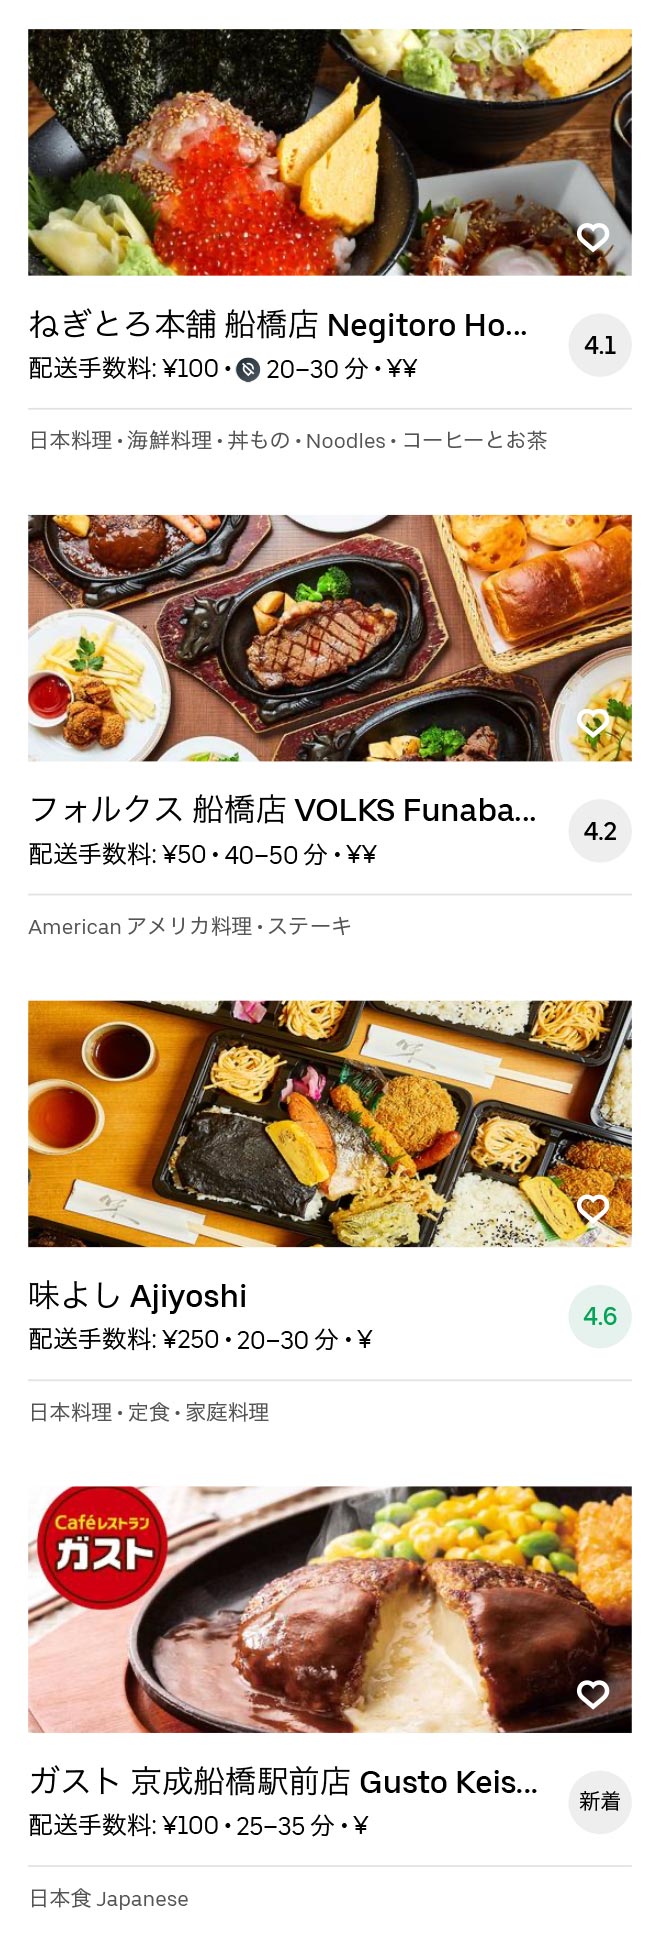 Funabashi menu 2008 09